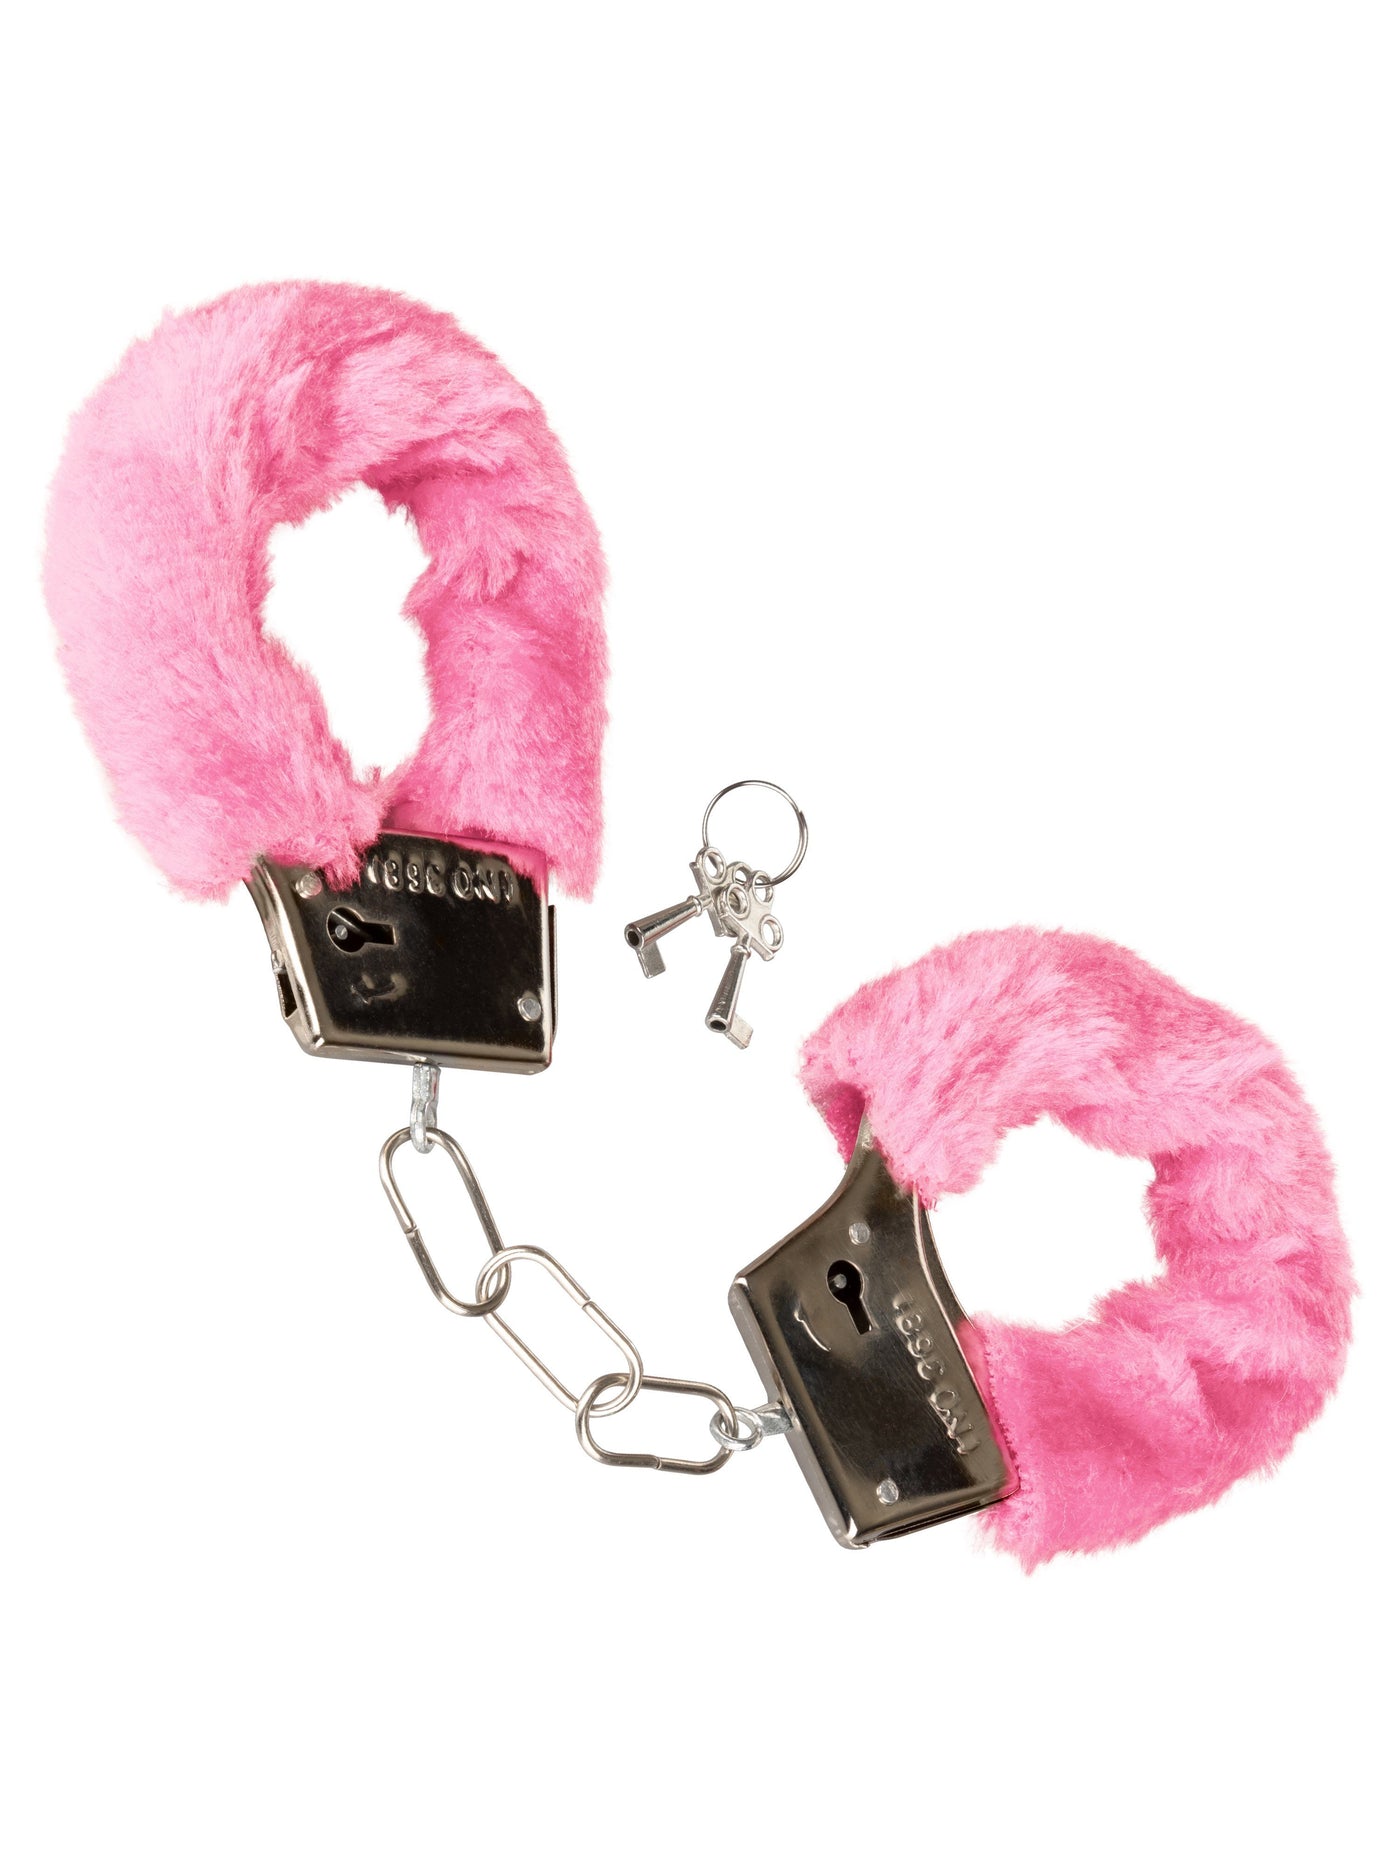 Playful Metal Faux Fur Covered Hand Cuffs Bondage & Fetish CalExotics Pink